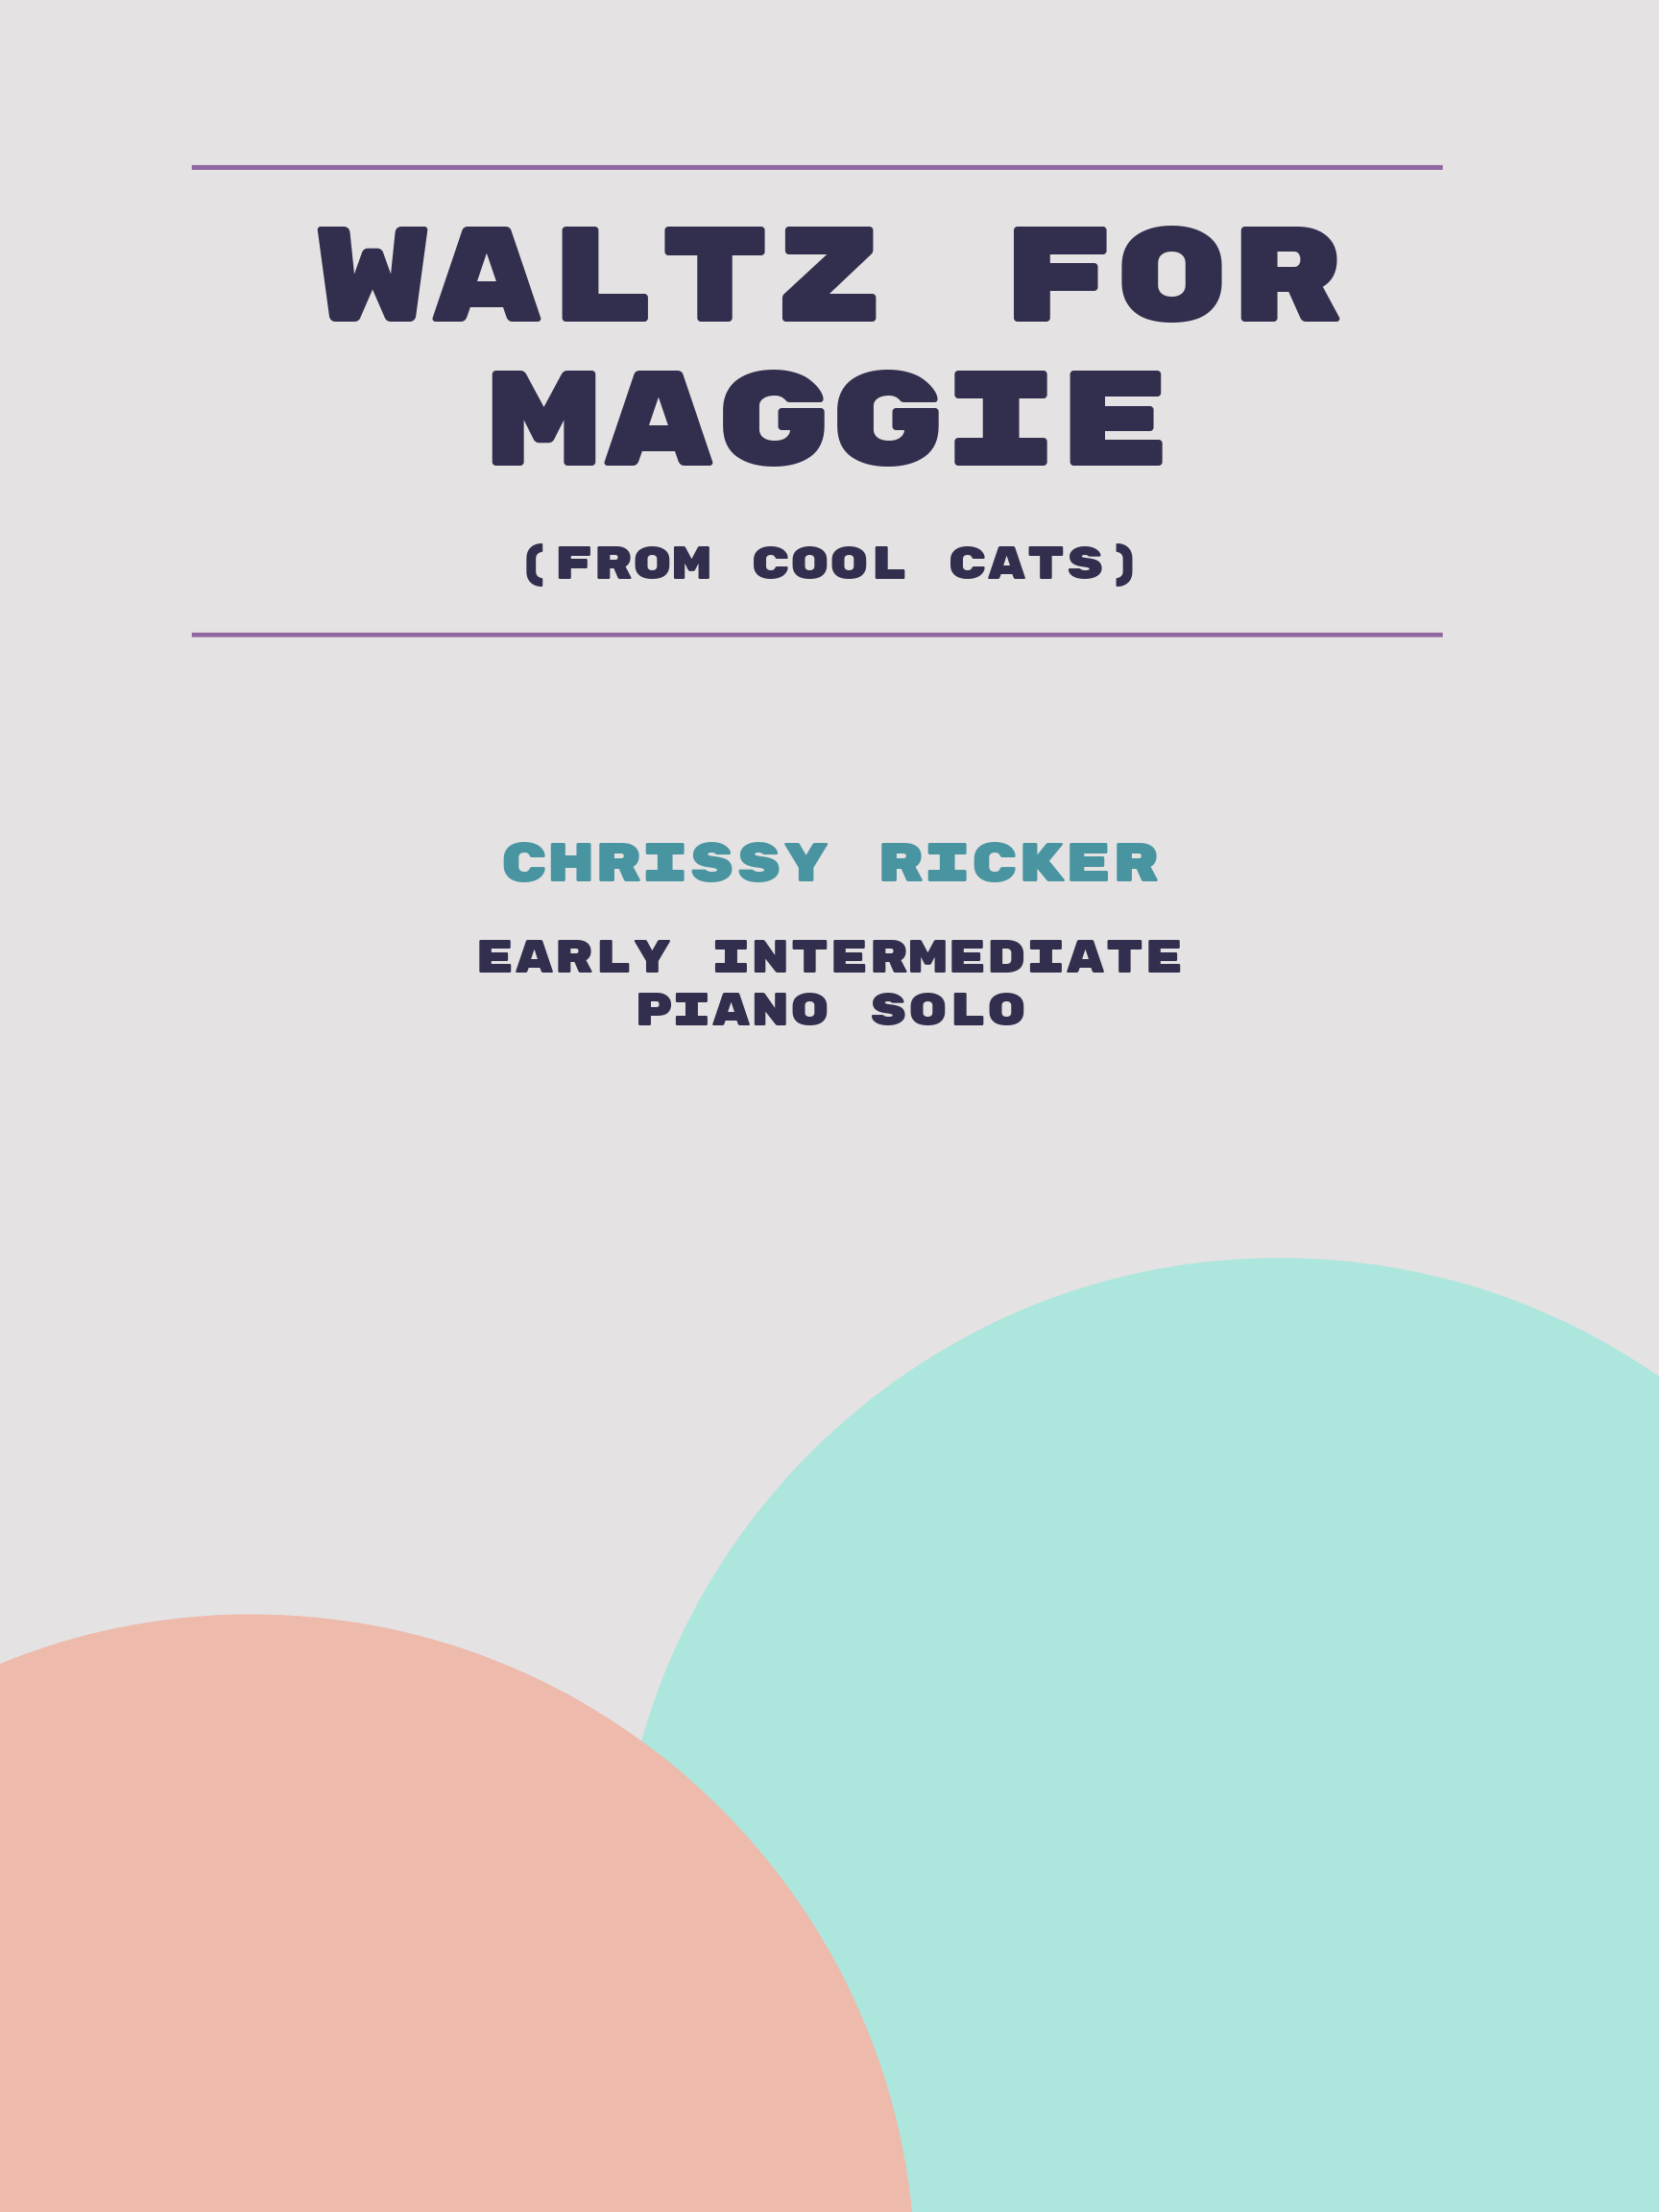 Waltz for Maggie by Chrissy Ricker